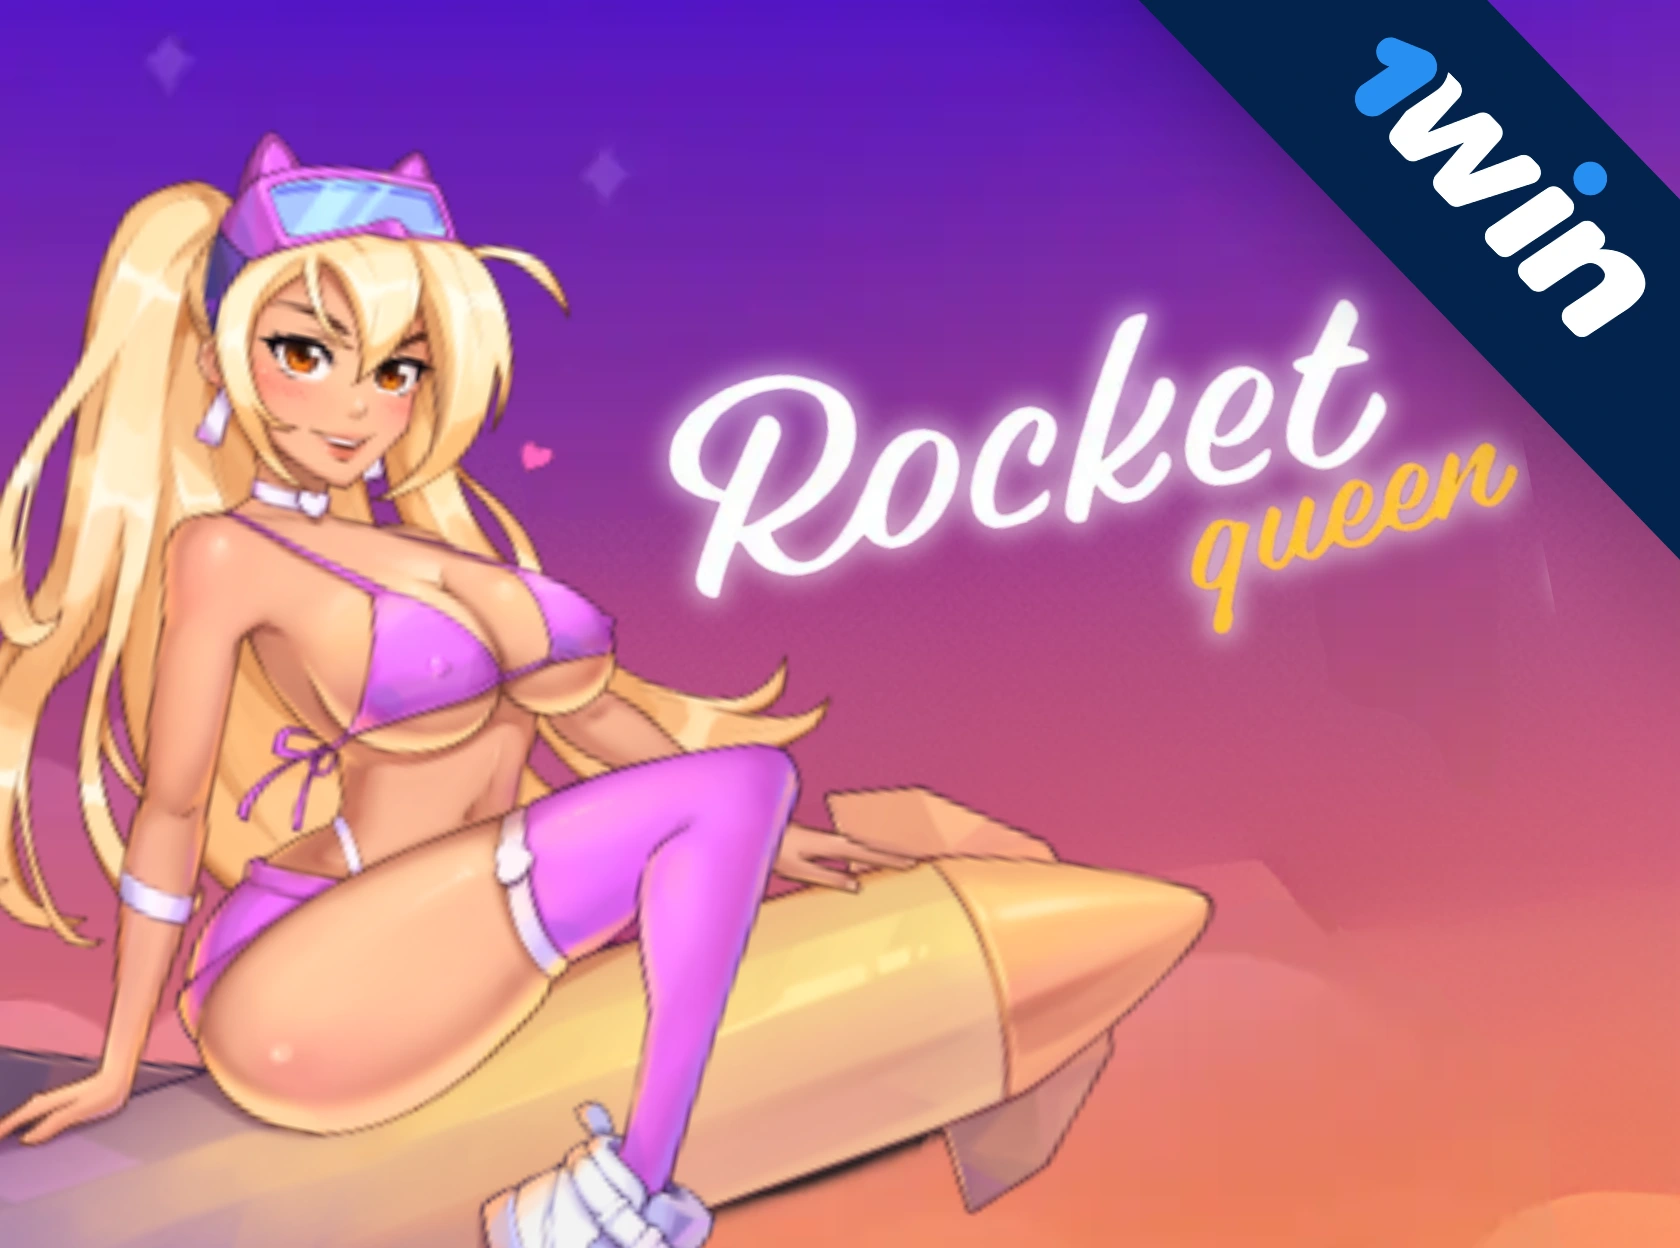 Rocket Queen - 1winning portlovchi zarbasi!